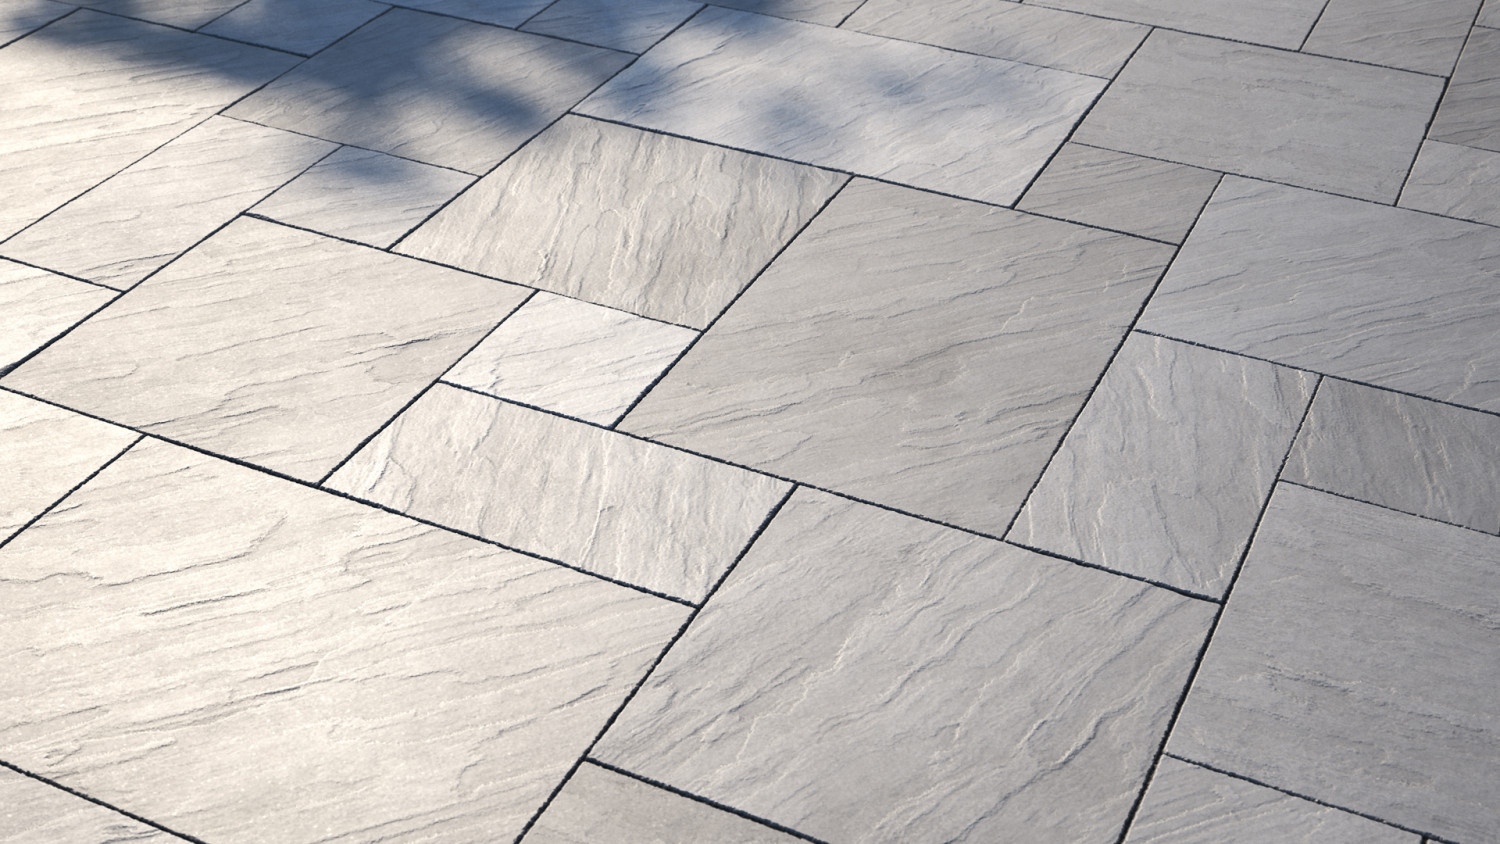 Square stone textured pavement